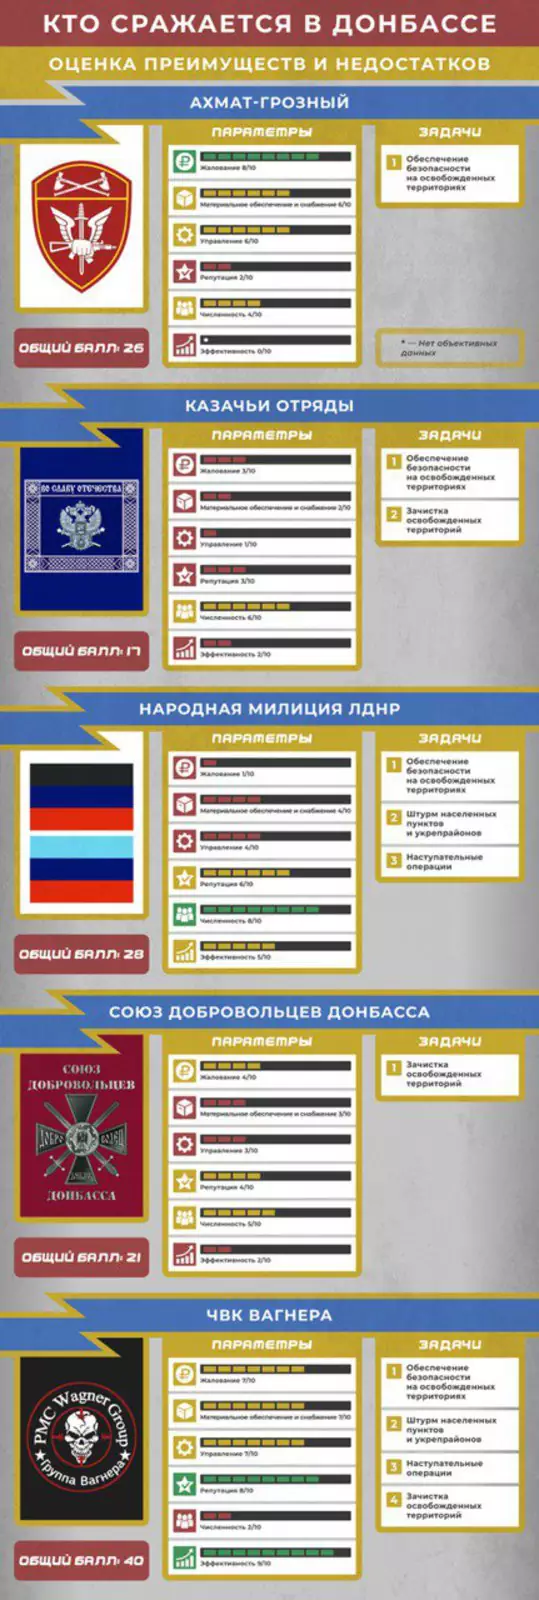 Московская база Союза добровольцев Донбасса